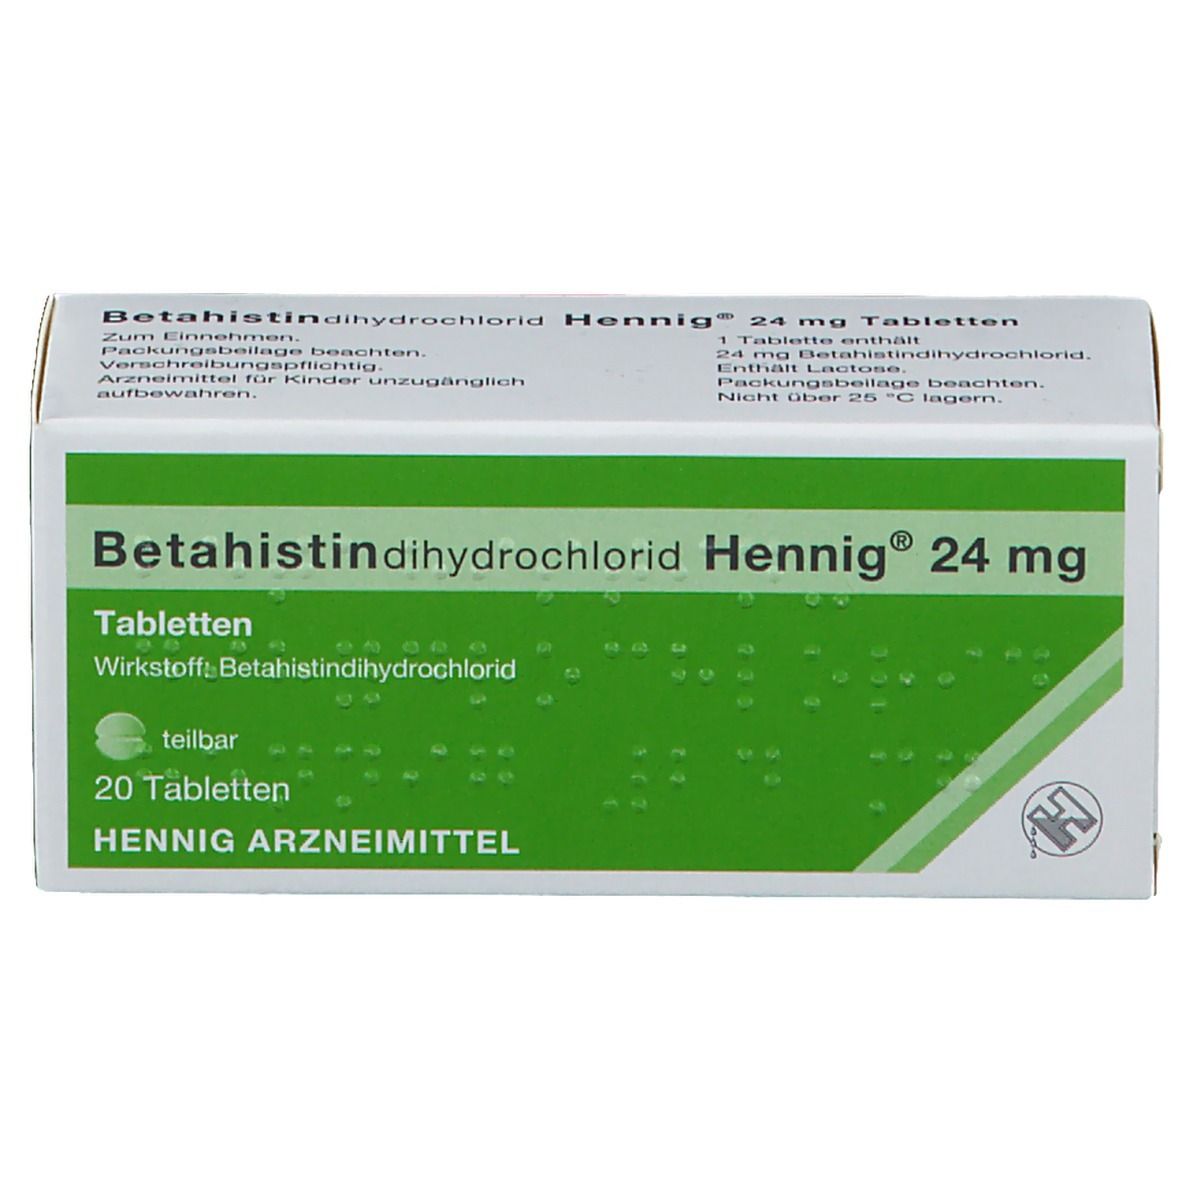 Betahistindihydrochlorid Hennig® 24 mg